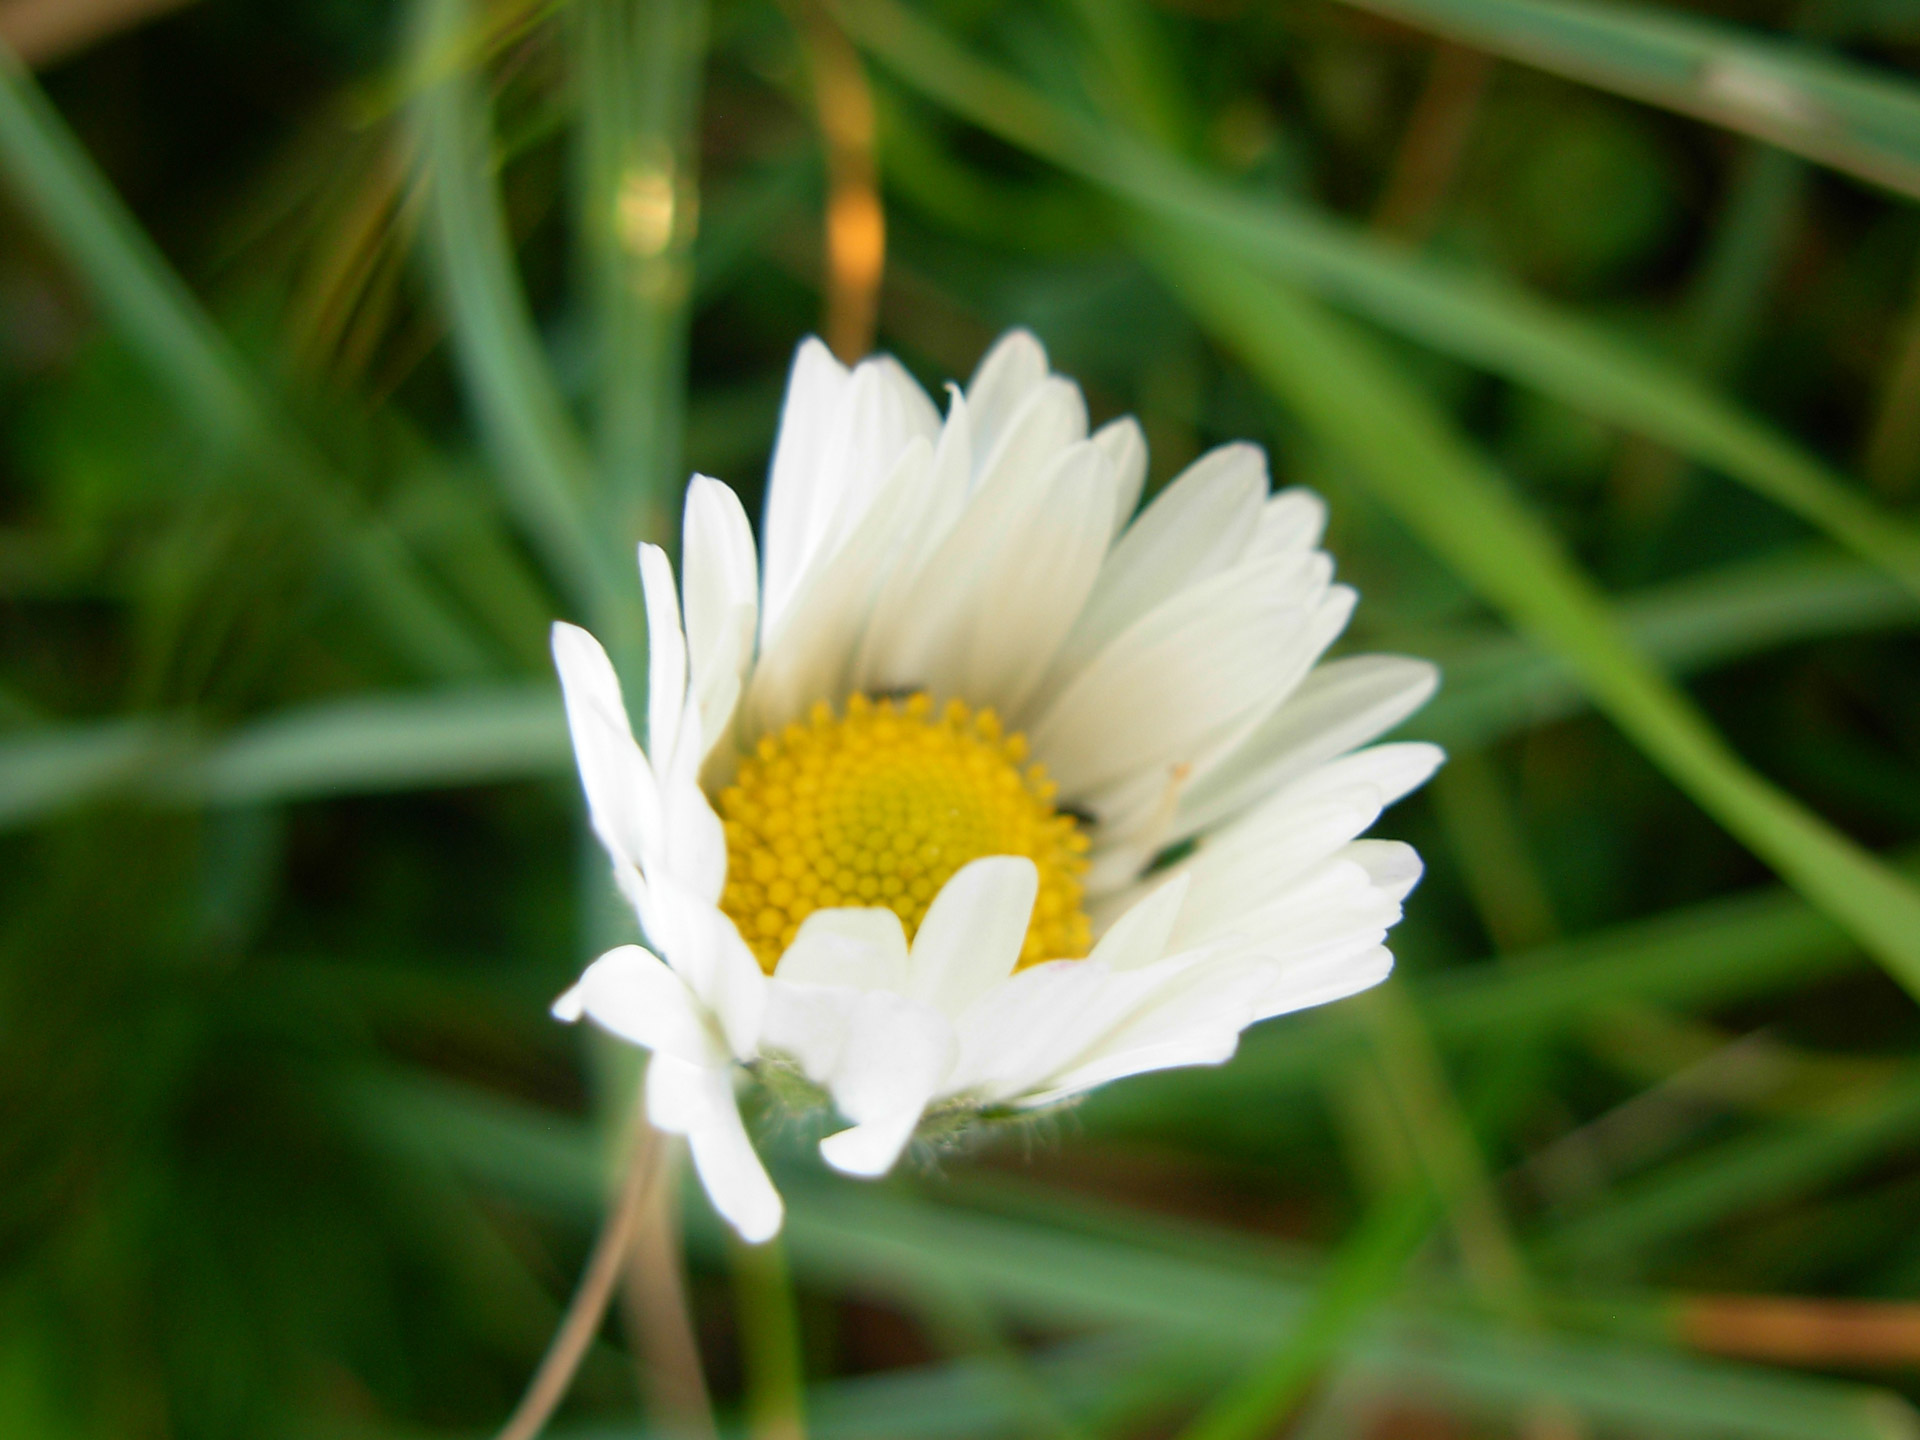 Download free photo of Nature,winter,flowers,daisy,daisy - from needpix.com...